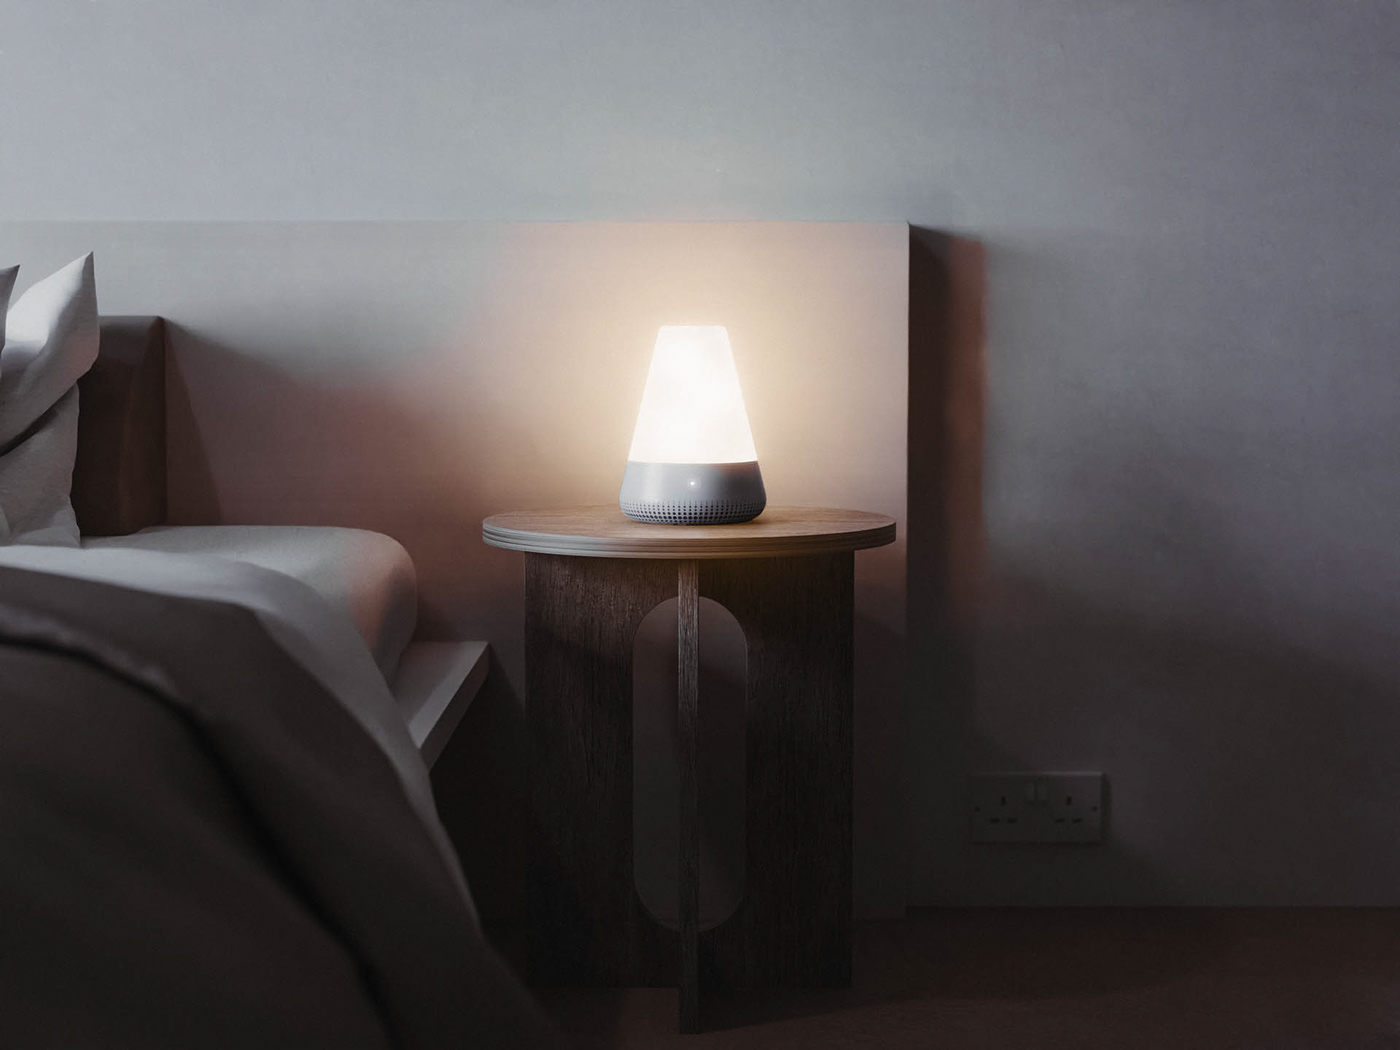 Lamp meditation lava lamp speaker white noise concept sleep Smart Home appliances Circadian rhythm